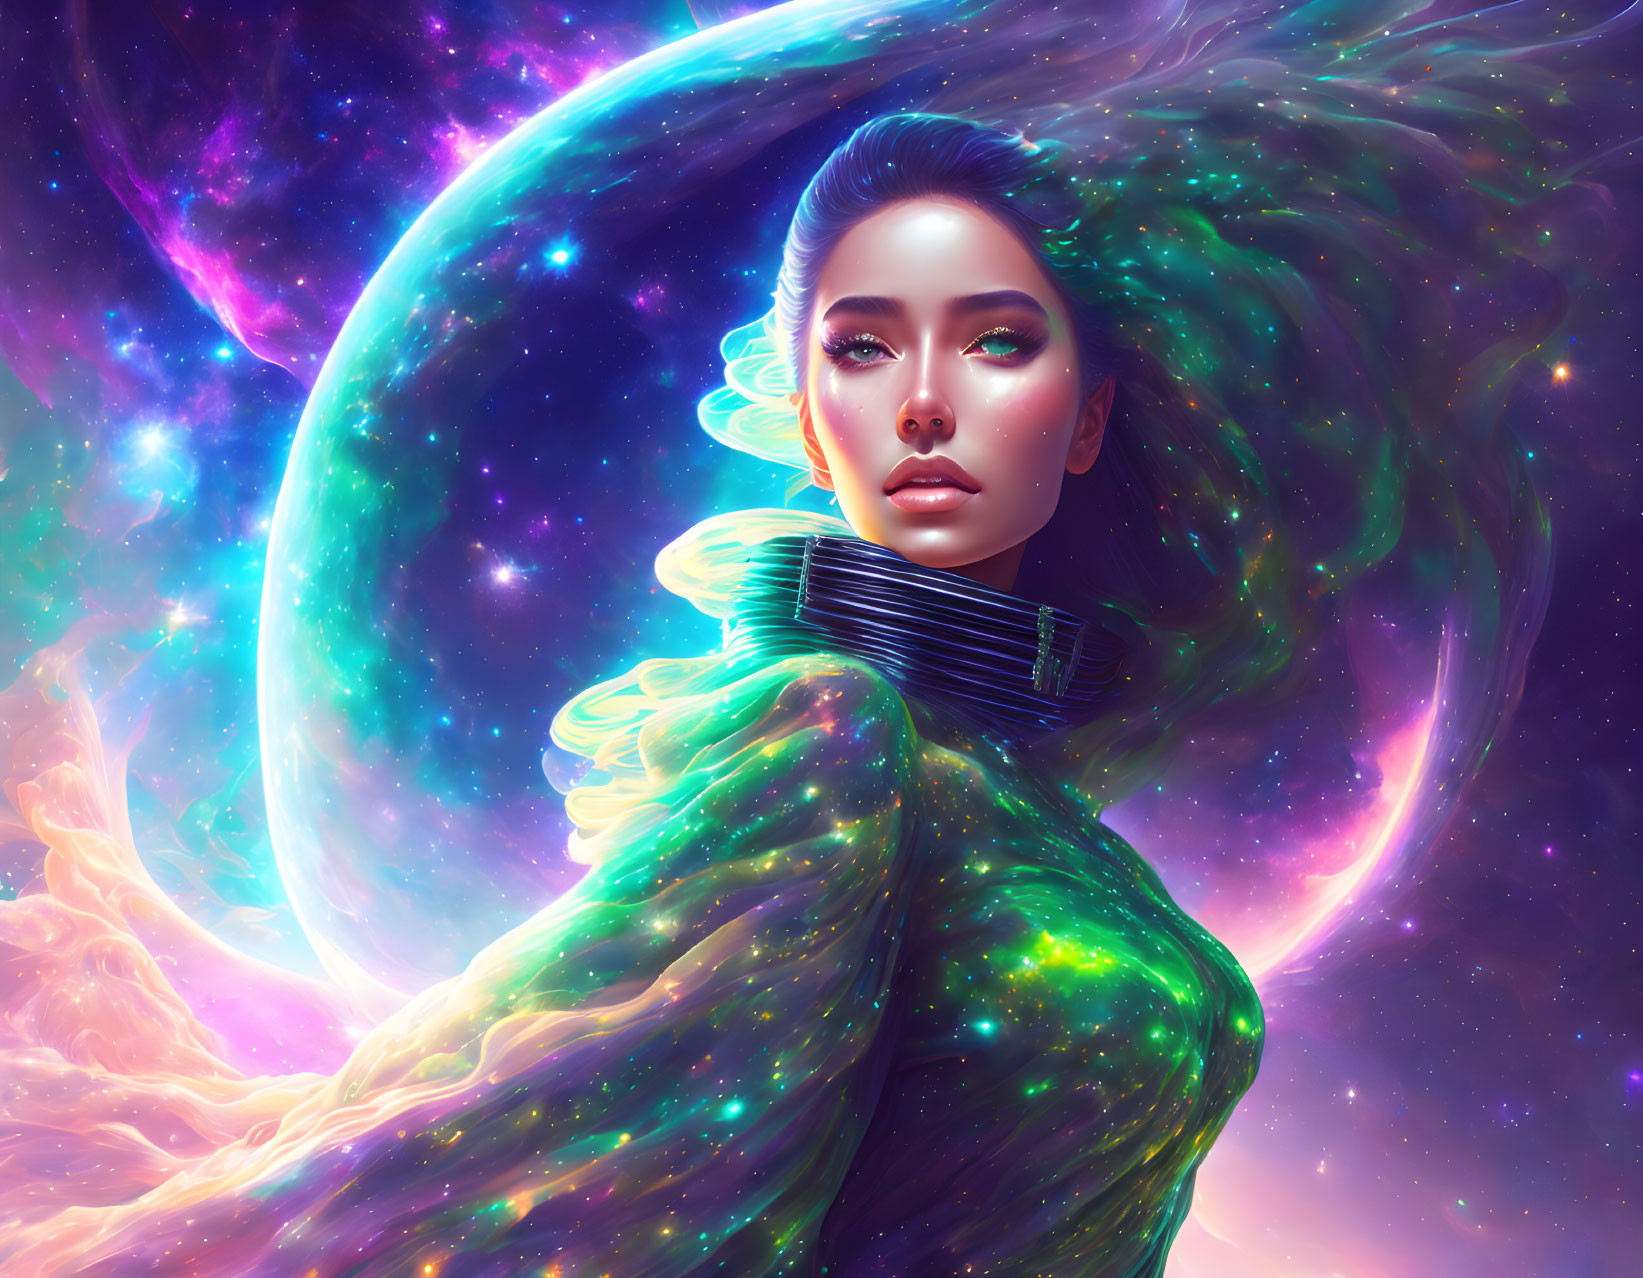 Digital Artwork: Woman merging with starscape, vibrant planet & nebulae